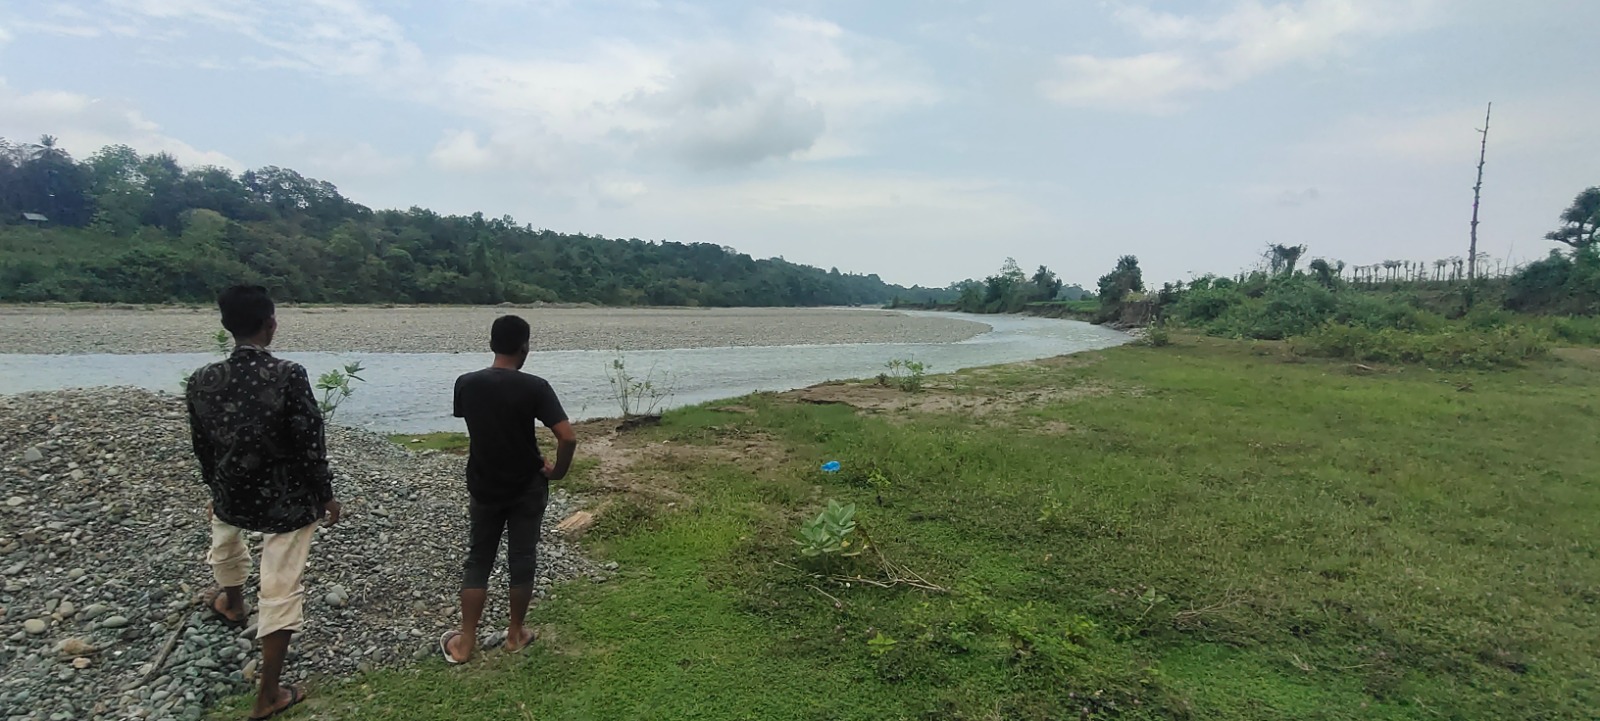 Puluhan hektare sawah warga di Pidie tergerus erosi sungai